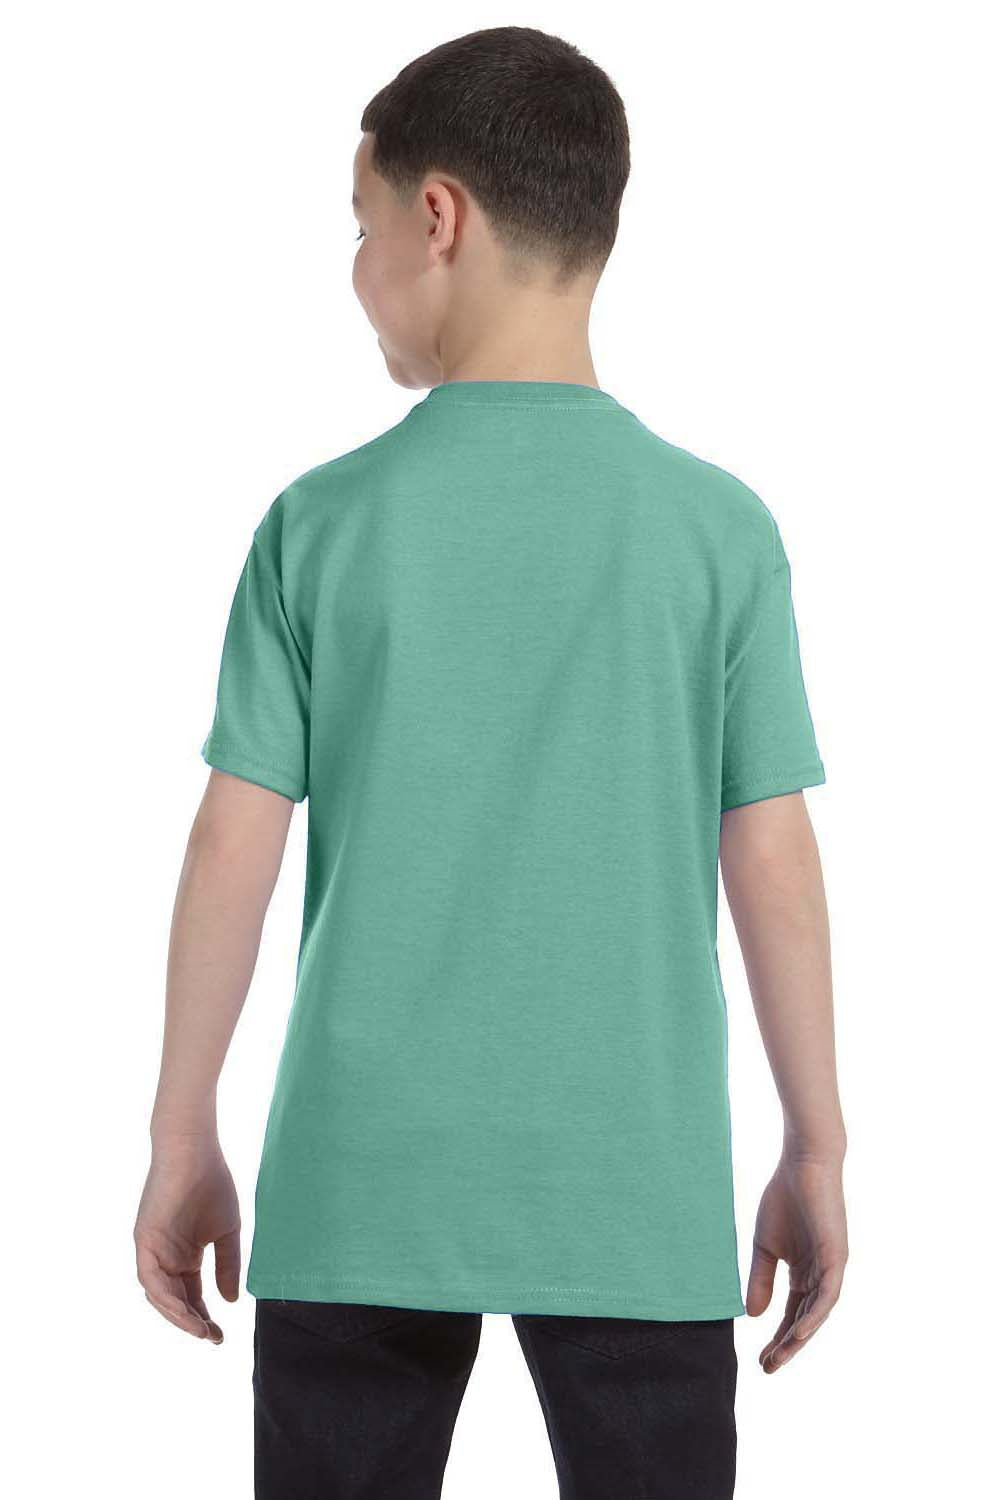 Hanes 54500 Youth ComfortSoft Short Sleeve Crewneck T-Shirt Mint Green Back